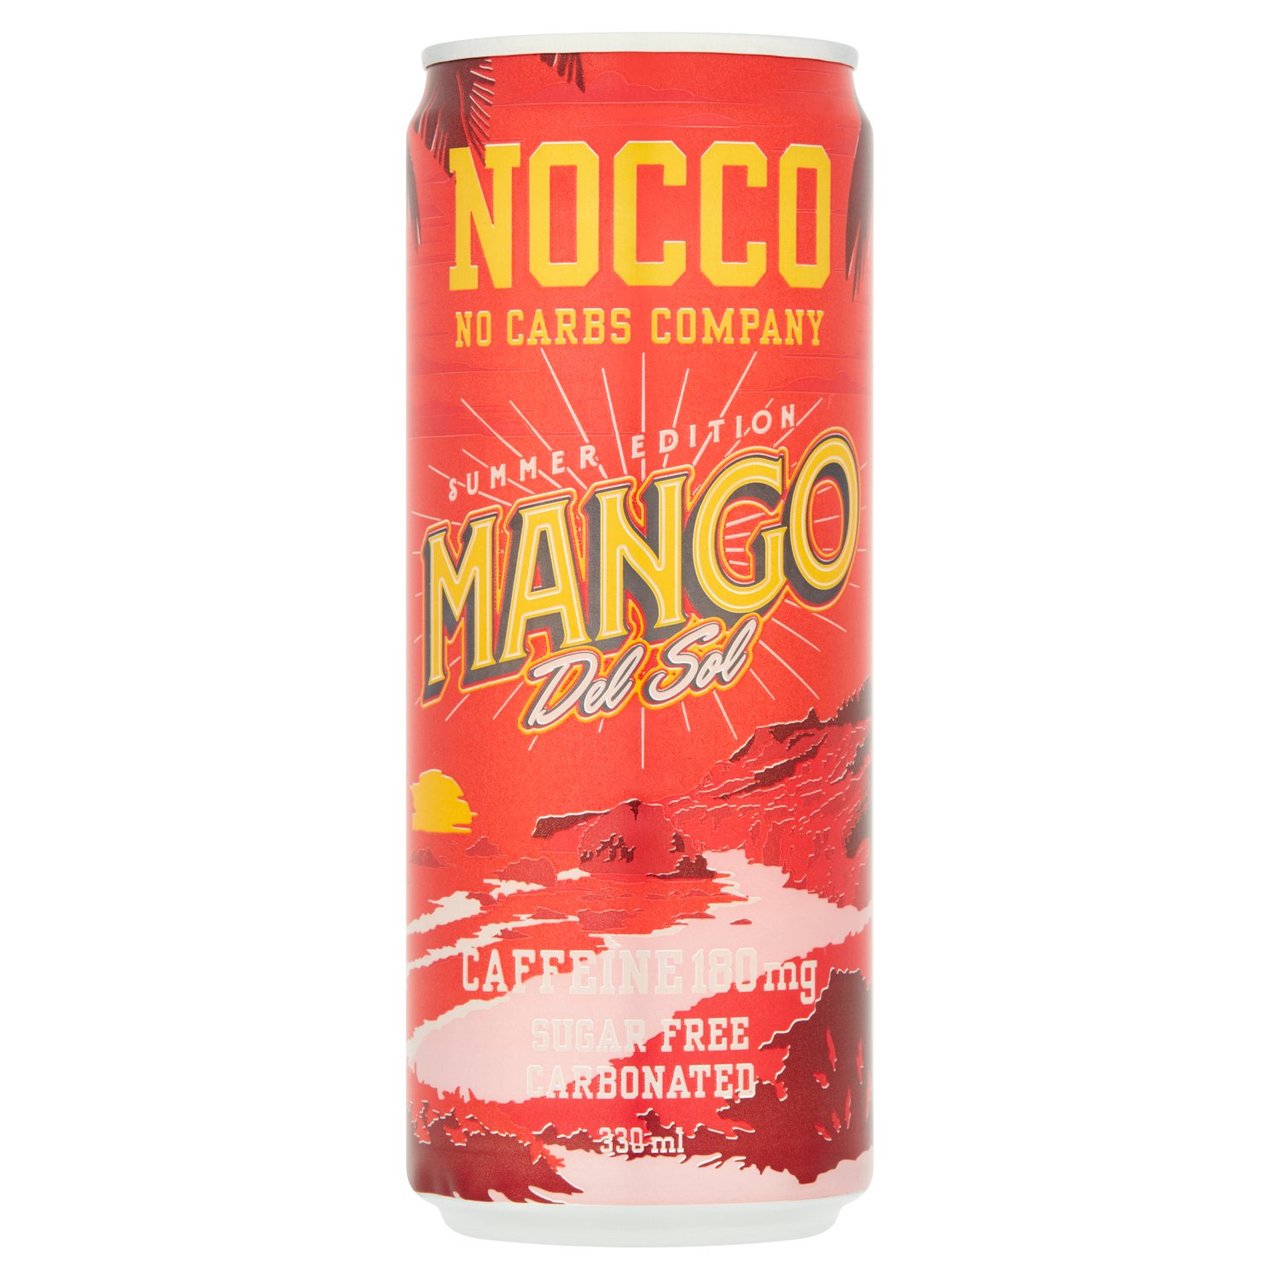 NOCCO Summer Edition Mango Del Sol Energy Drink 330ml The Pantry Basket